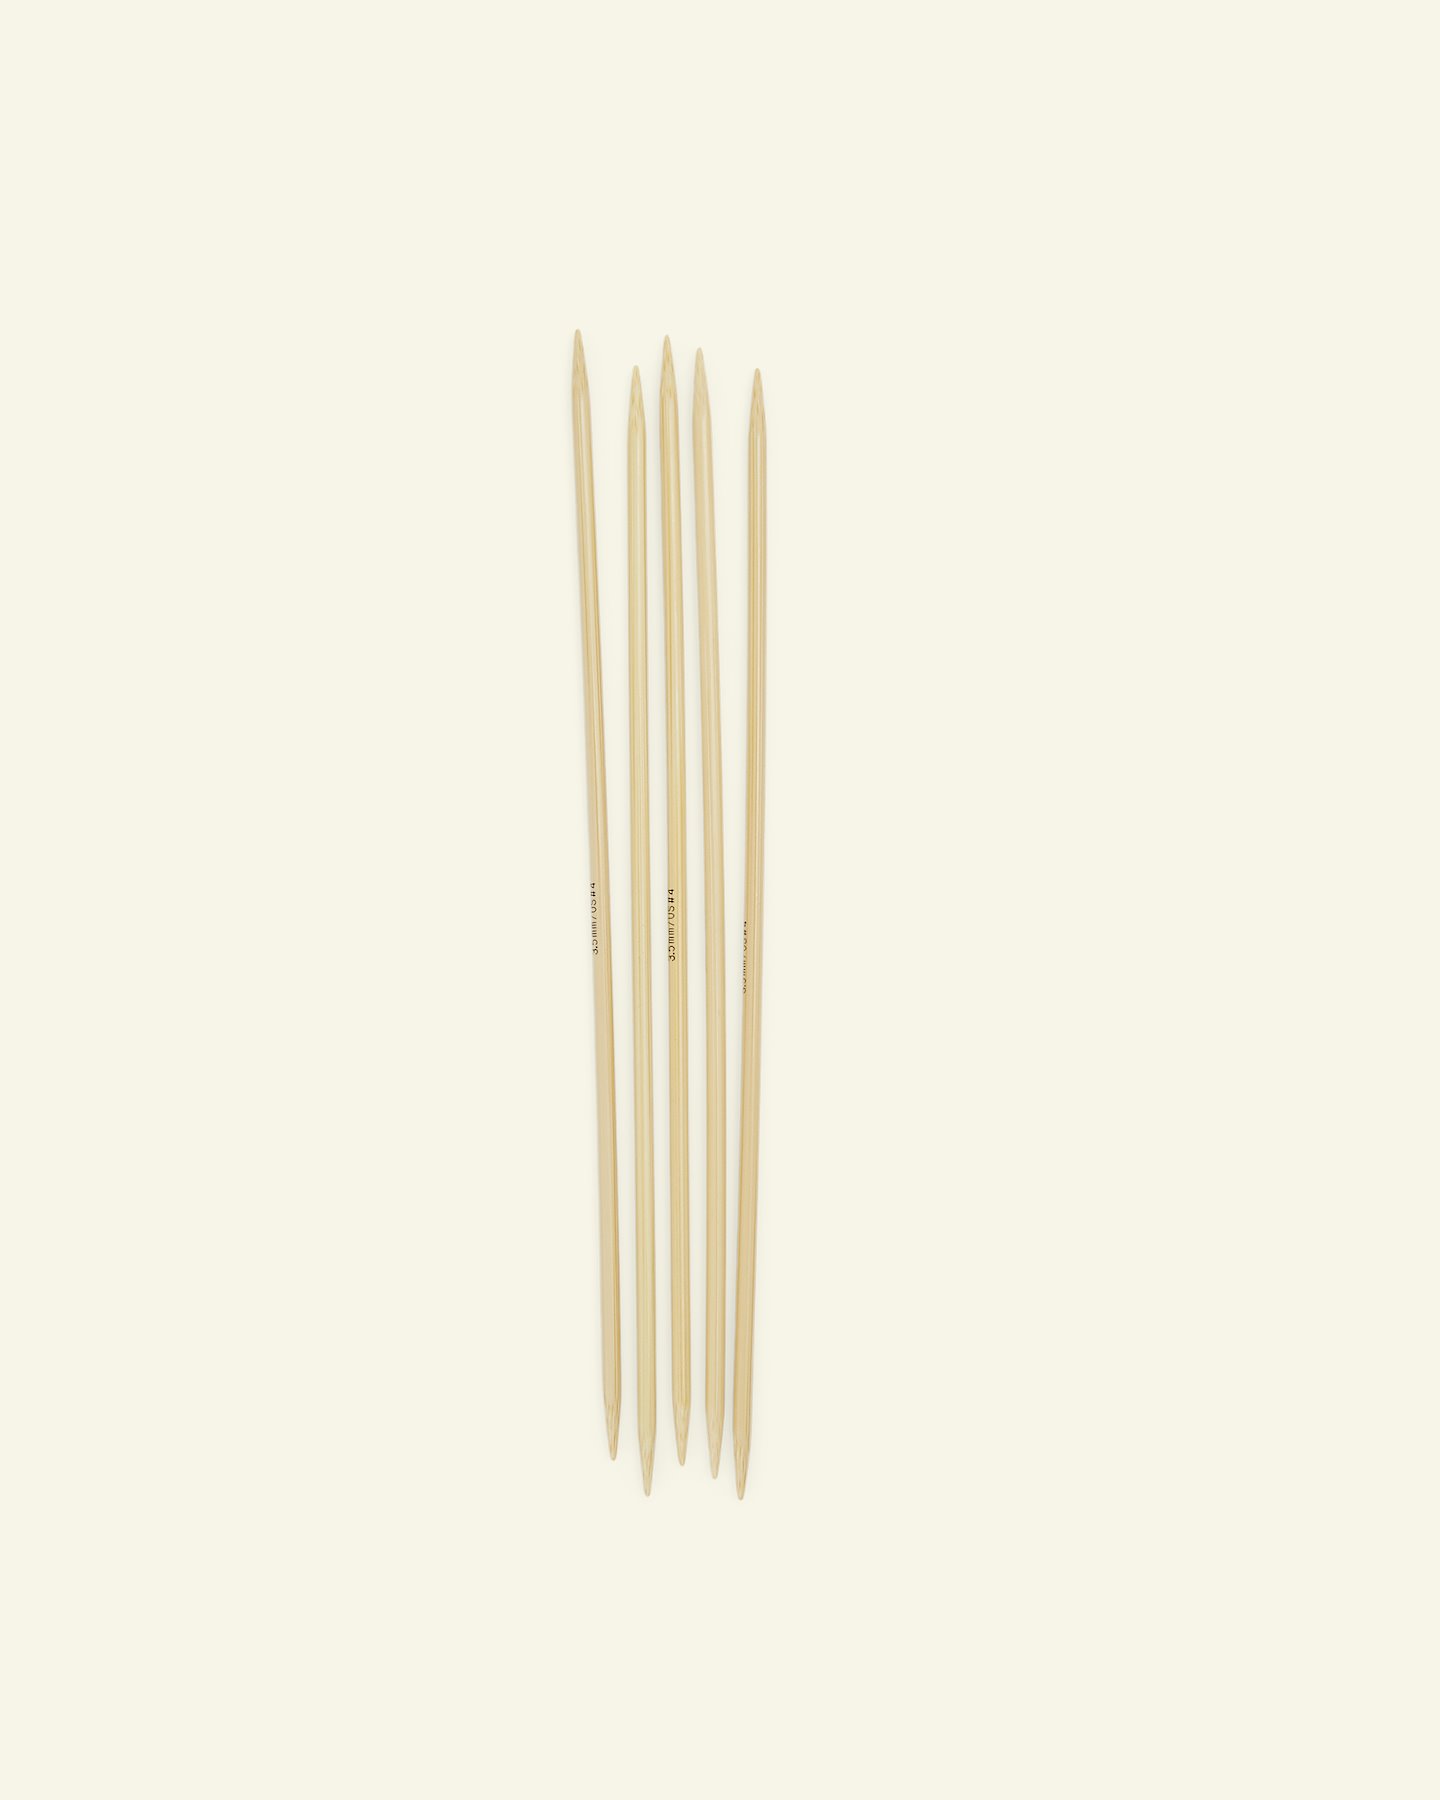 Addi strømpepinde bambus 20cm 3,5mm 83275_pack